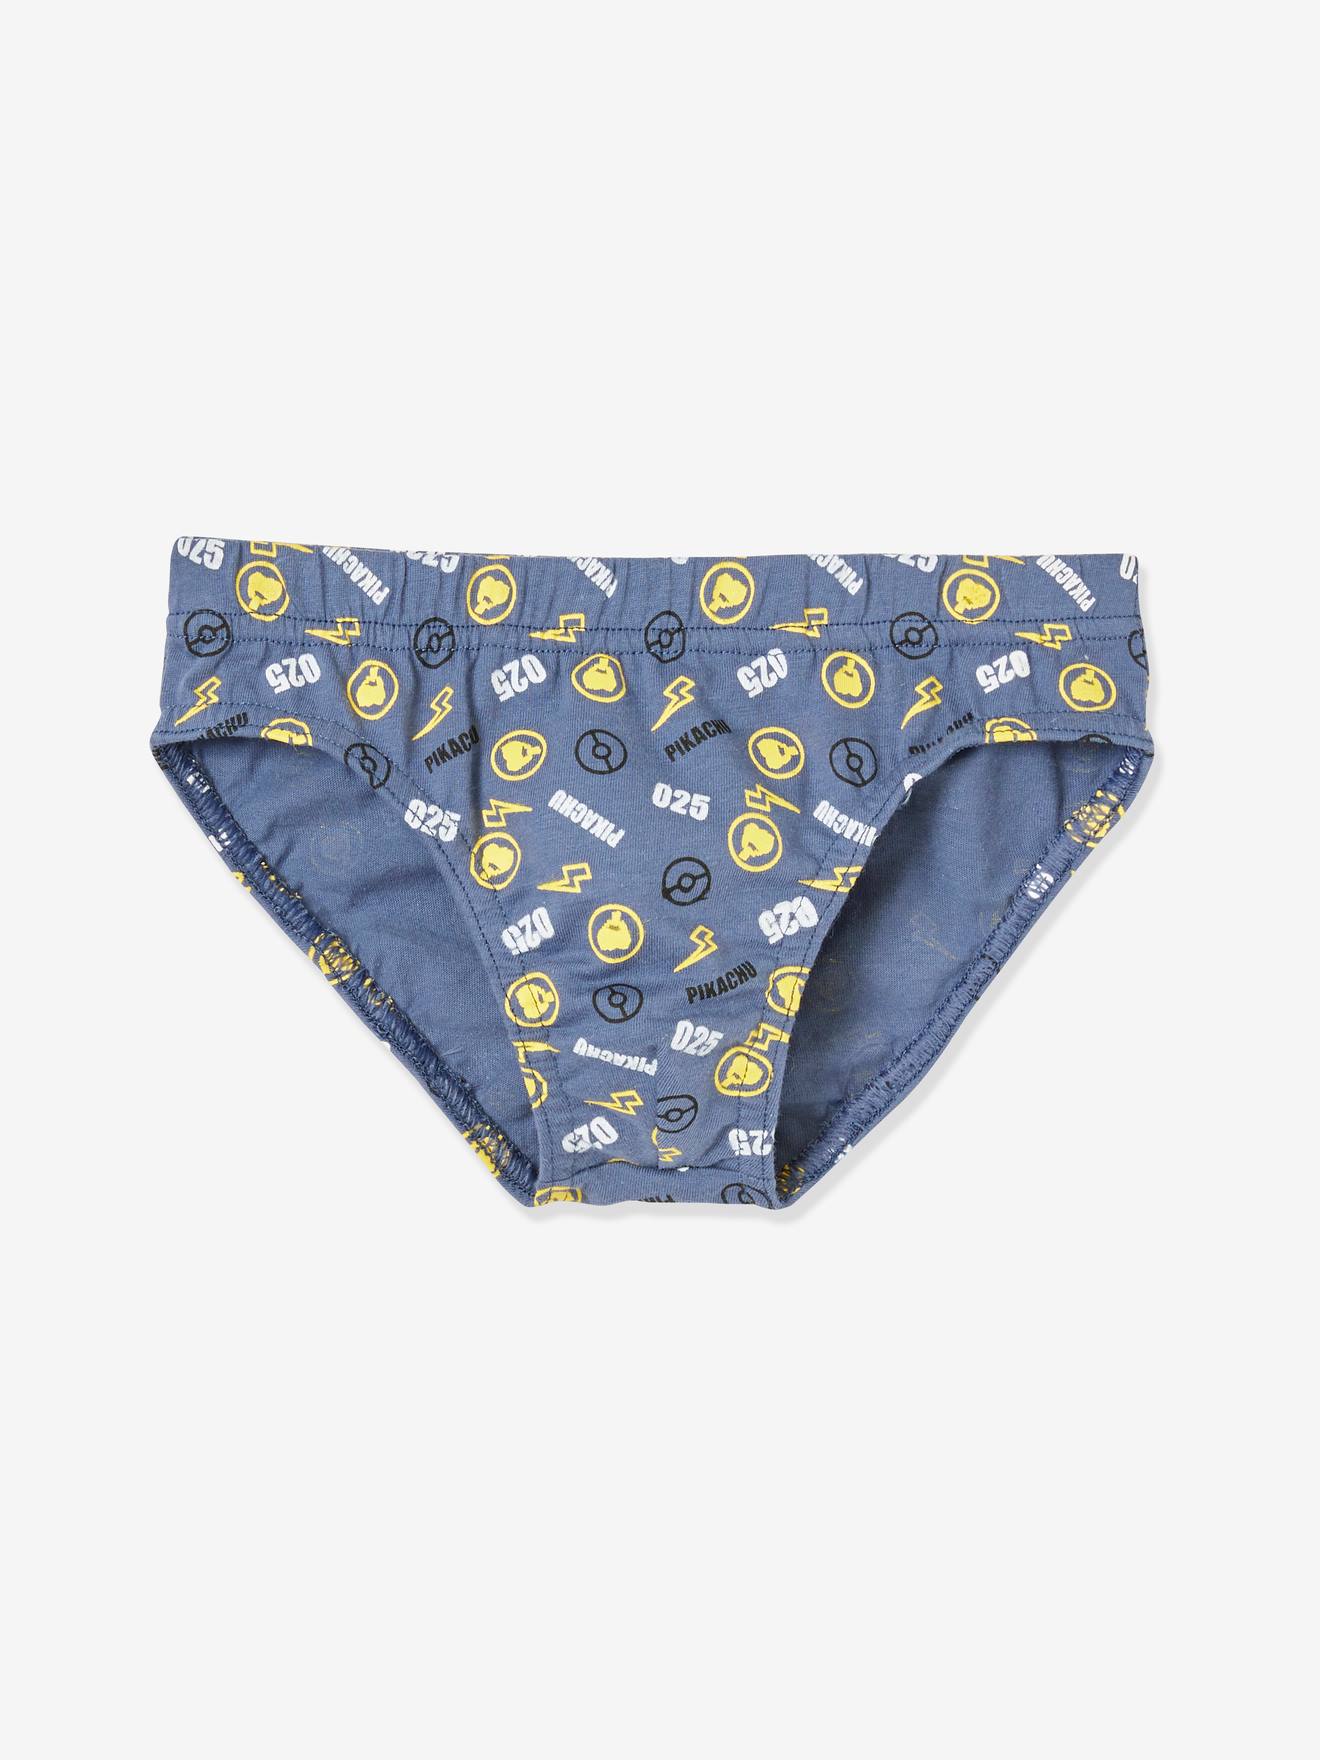 Pokemon Underwear Knickers Thong Beautiful Gift Present Womens